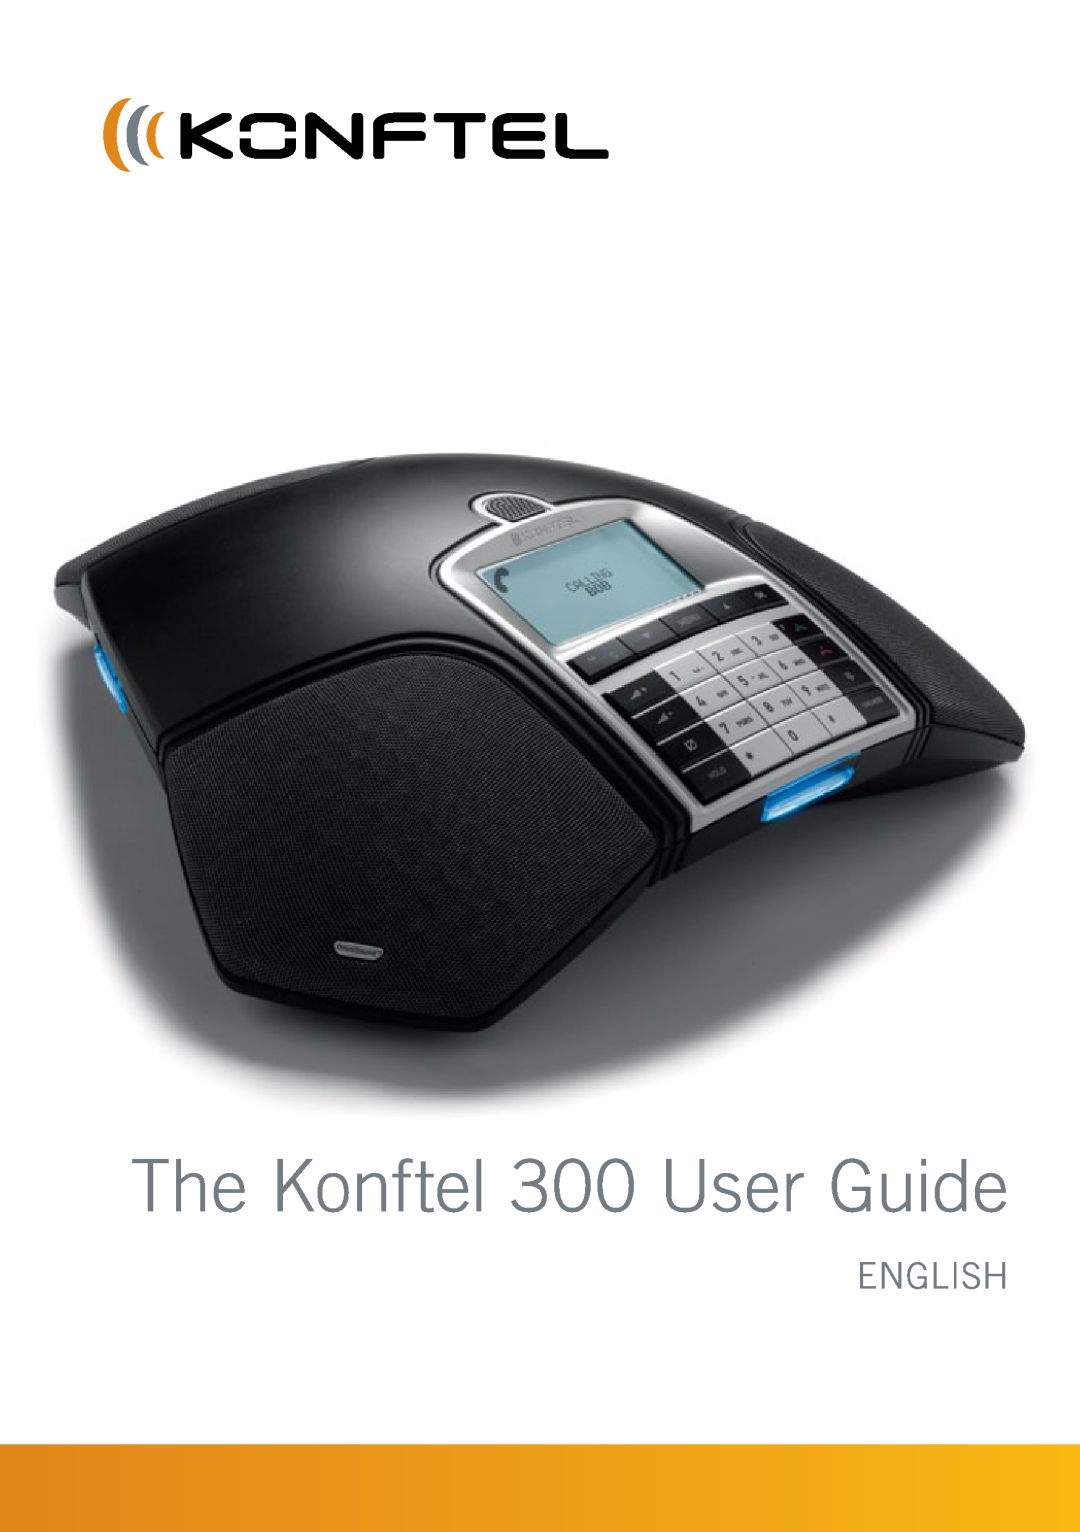 Konftel manual The Konftel 300 User Guide, English 